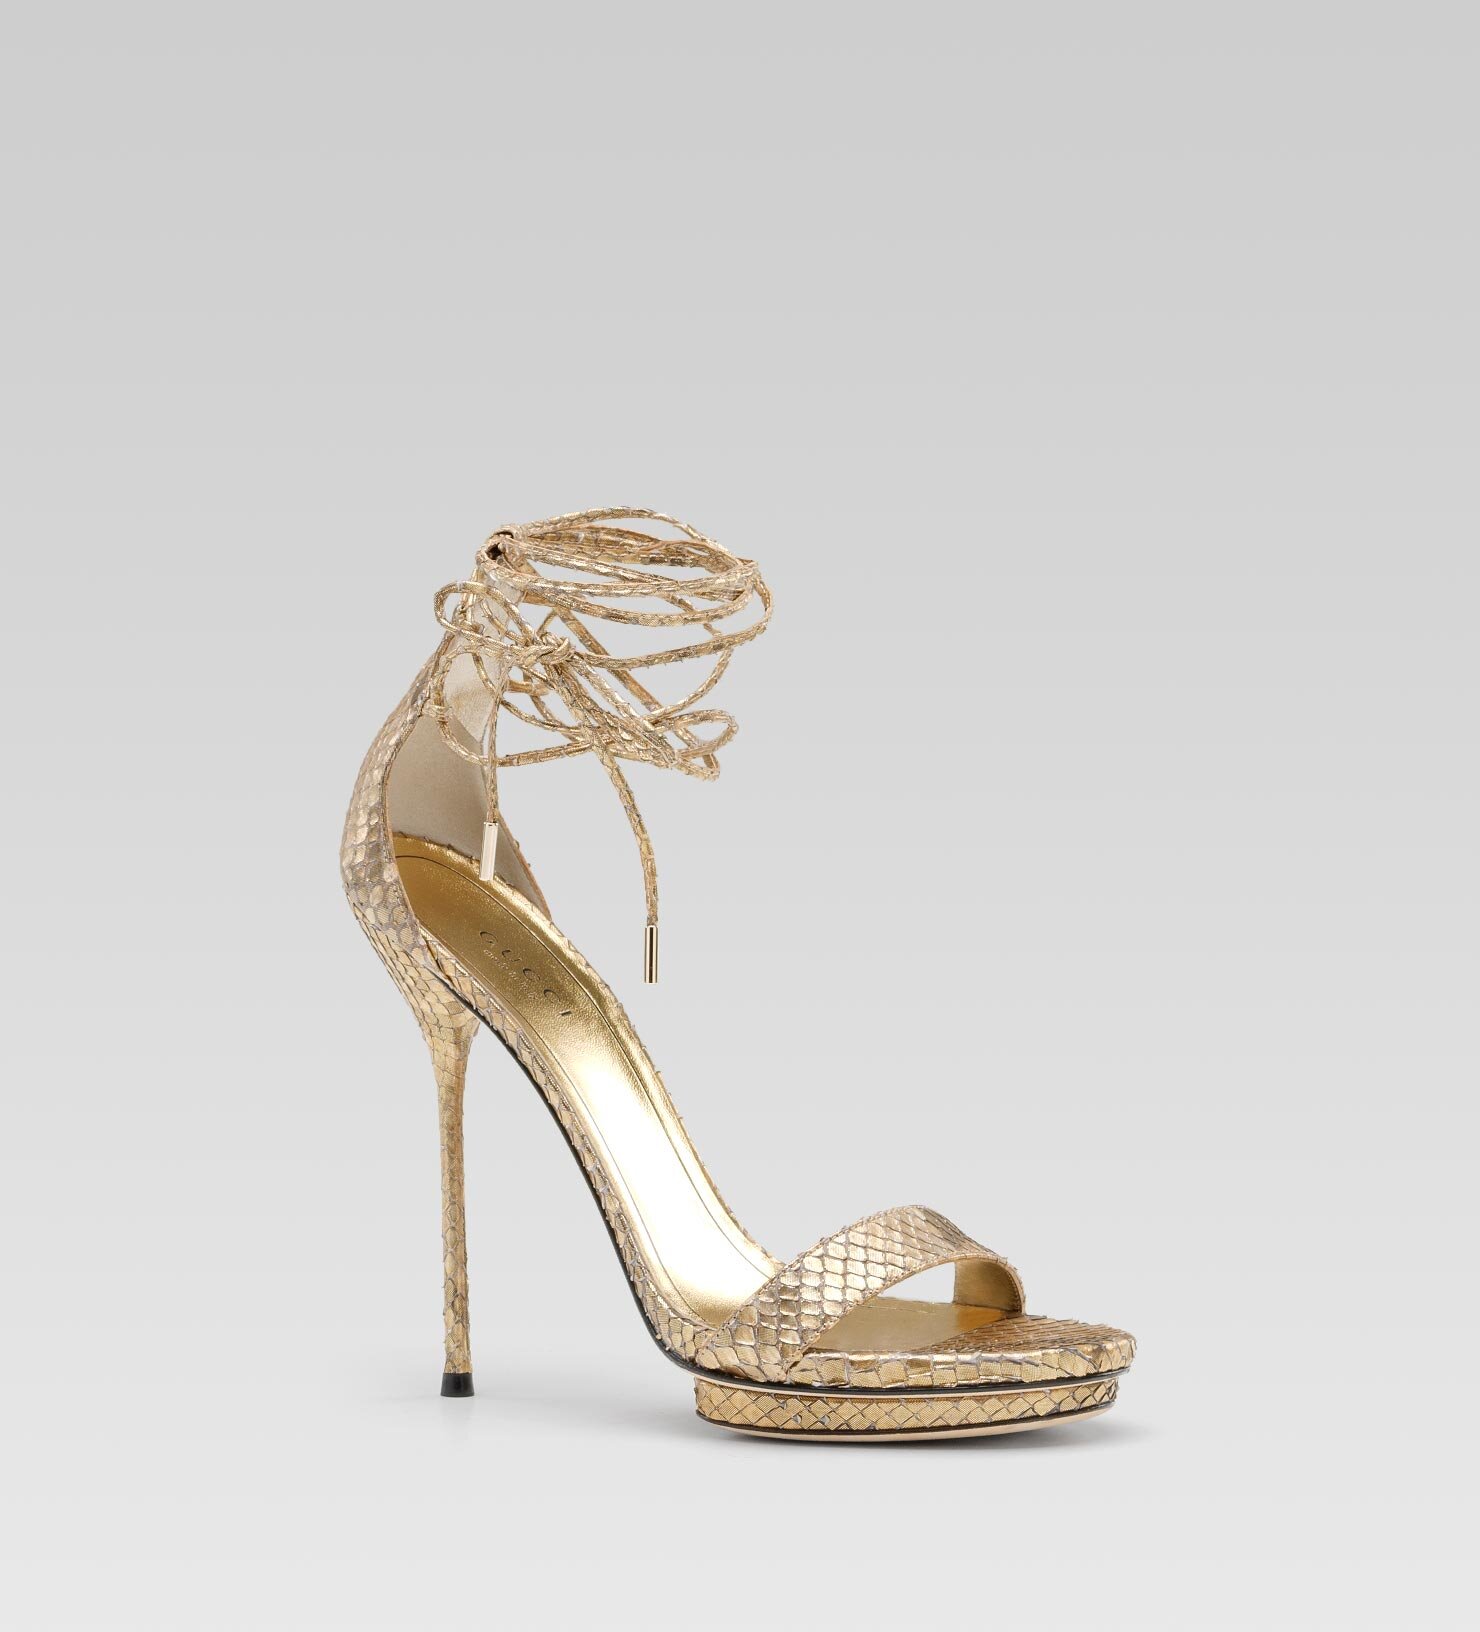 Gucci Ashley High Heel Platform Sandals in Gold.jpg